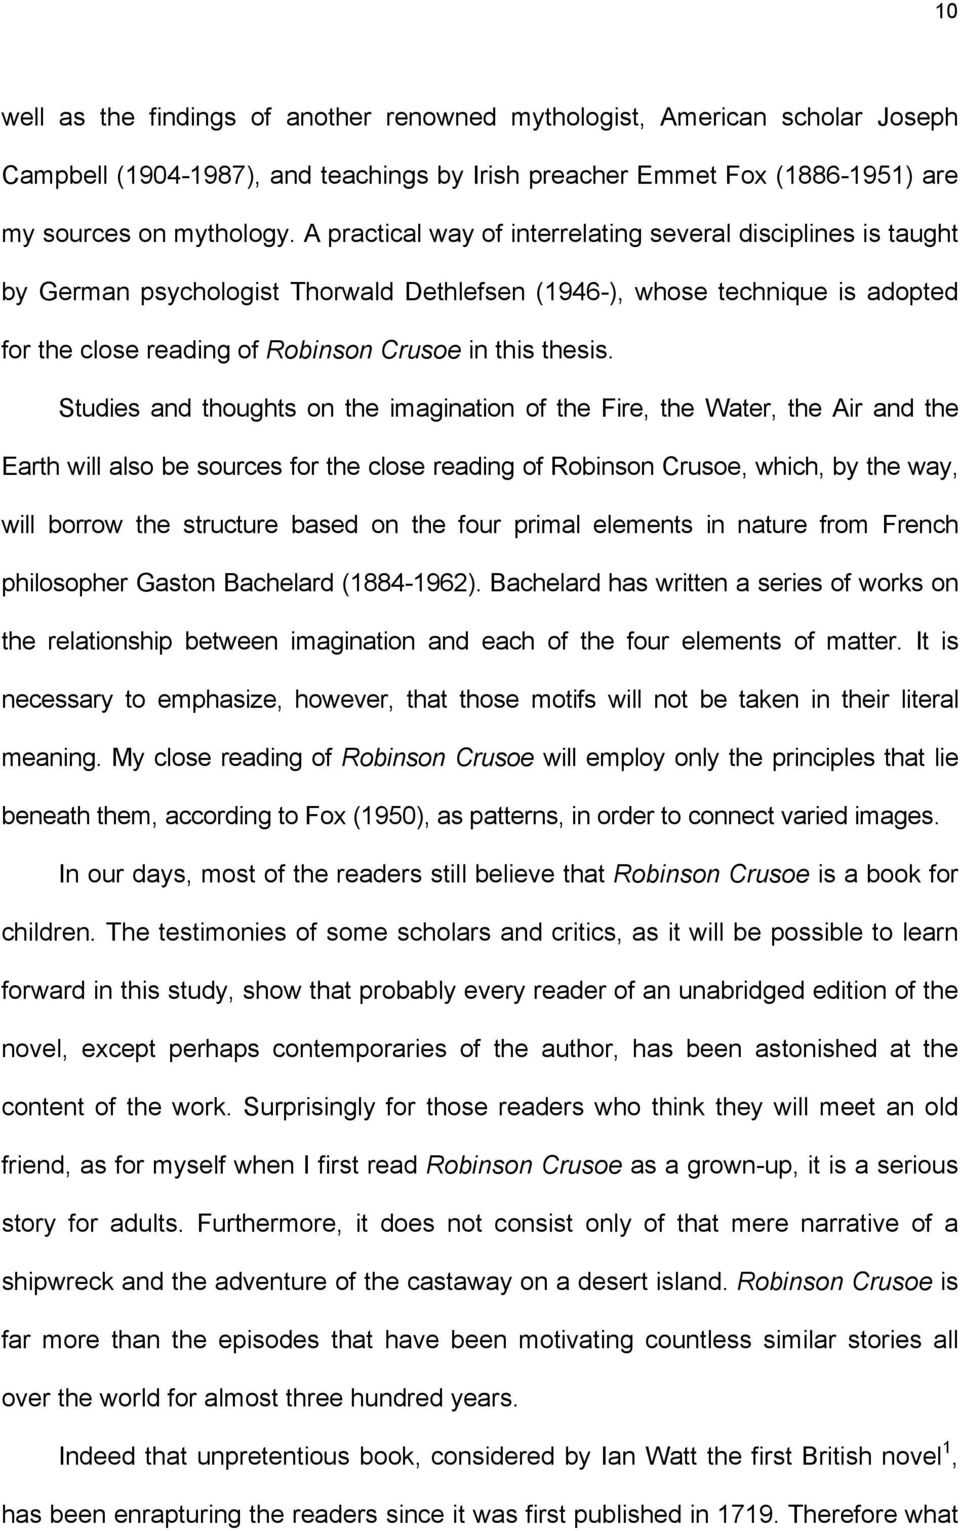 robinson crusoe critical analysis pdf